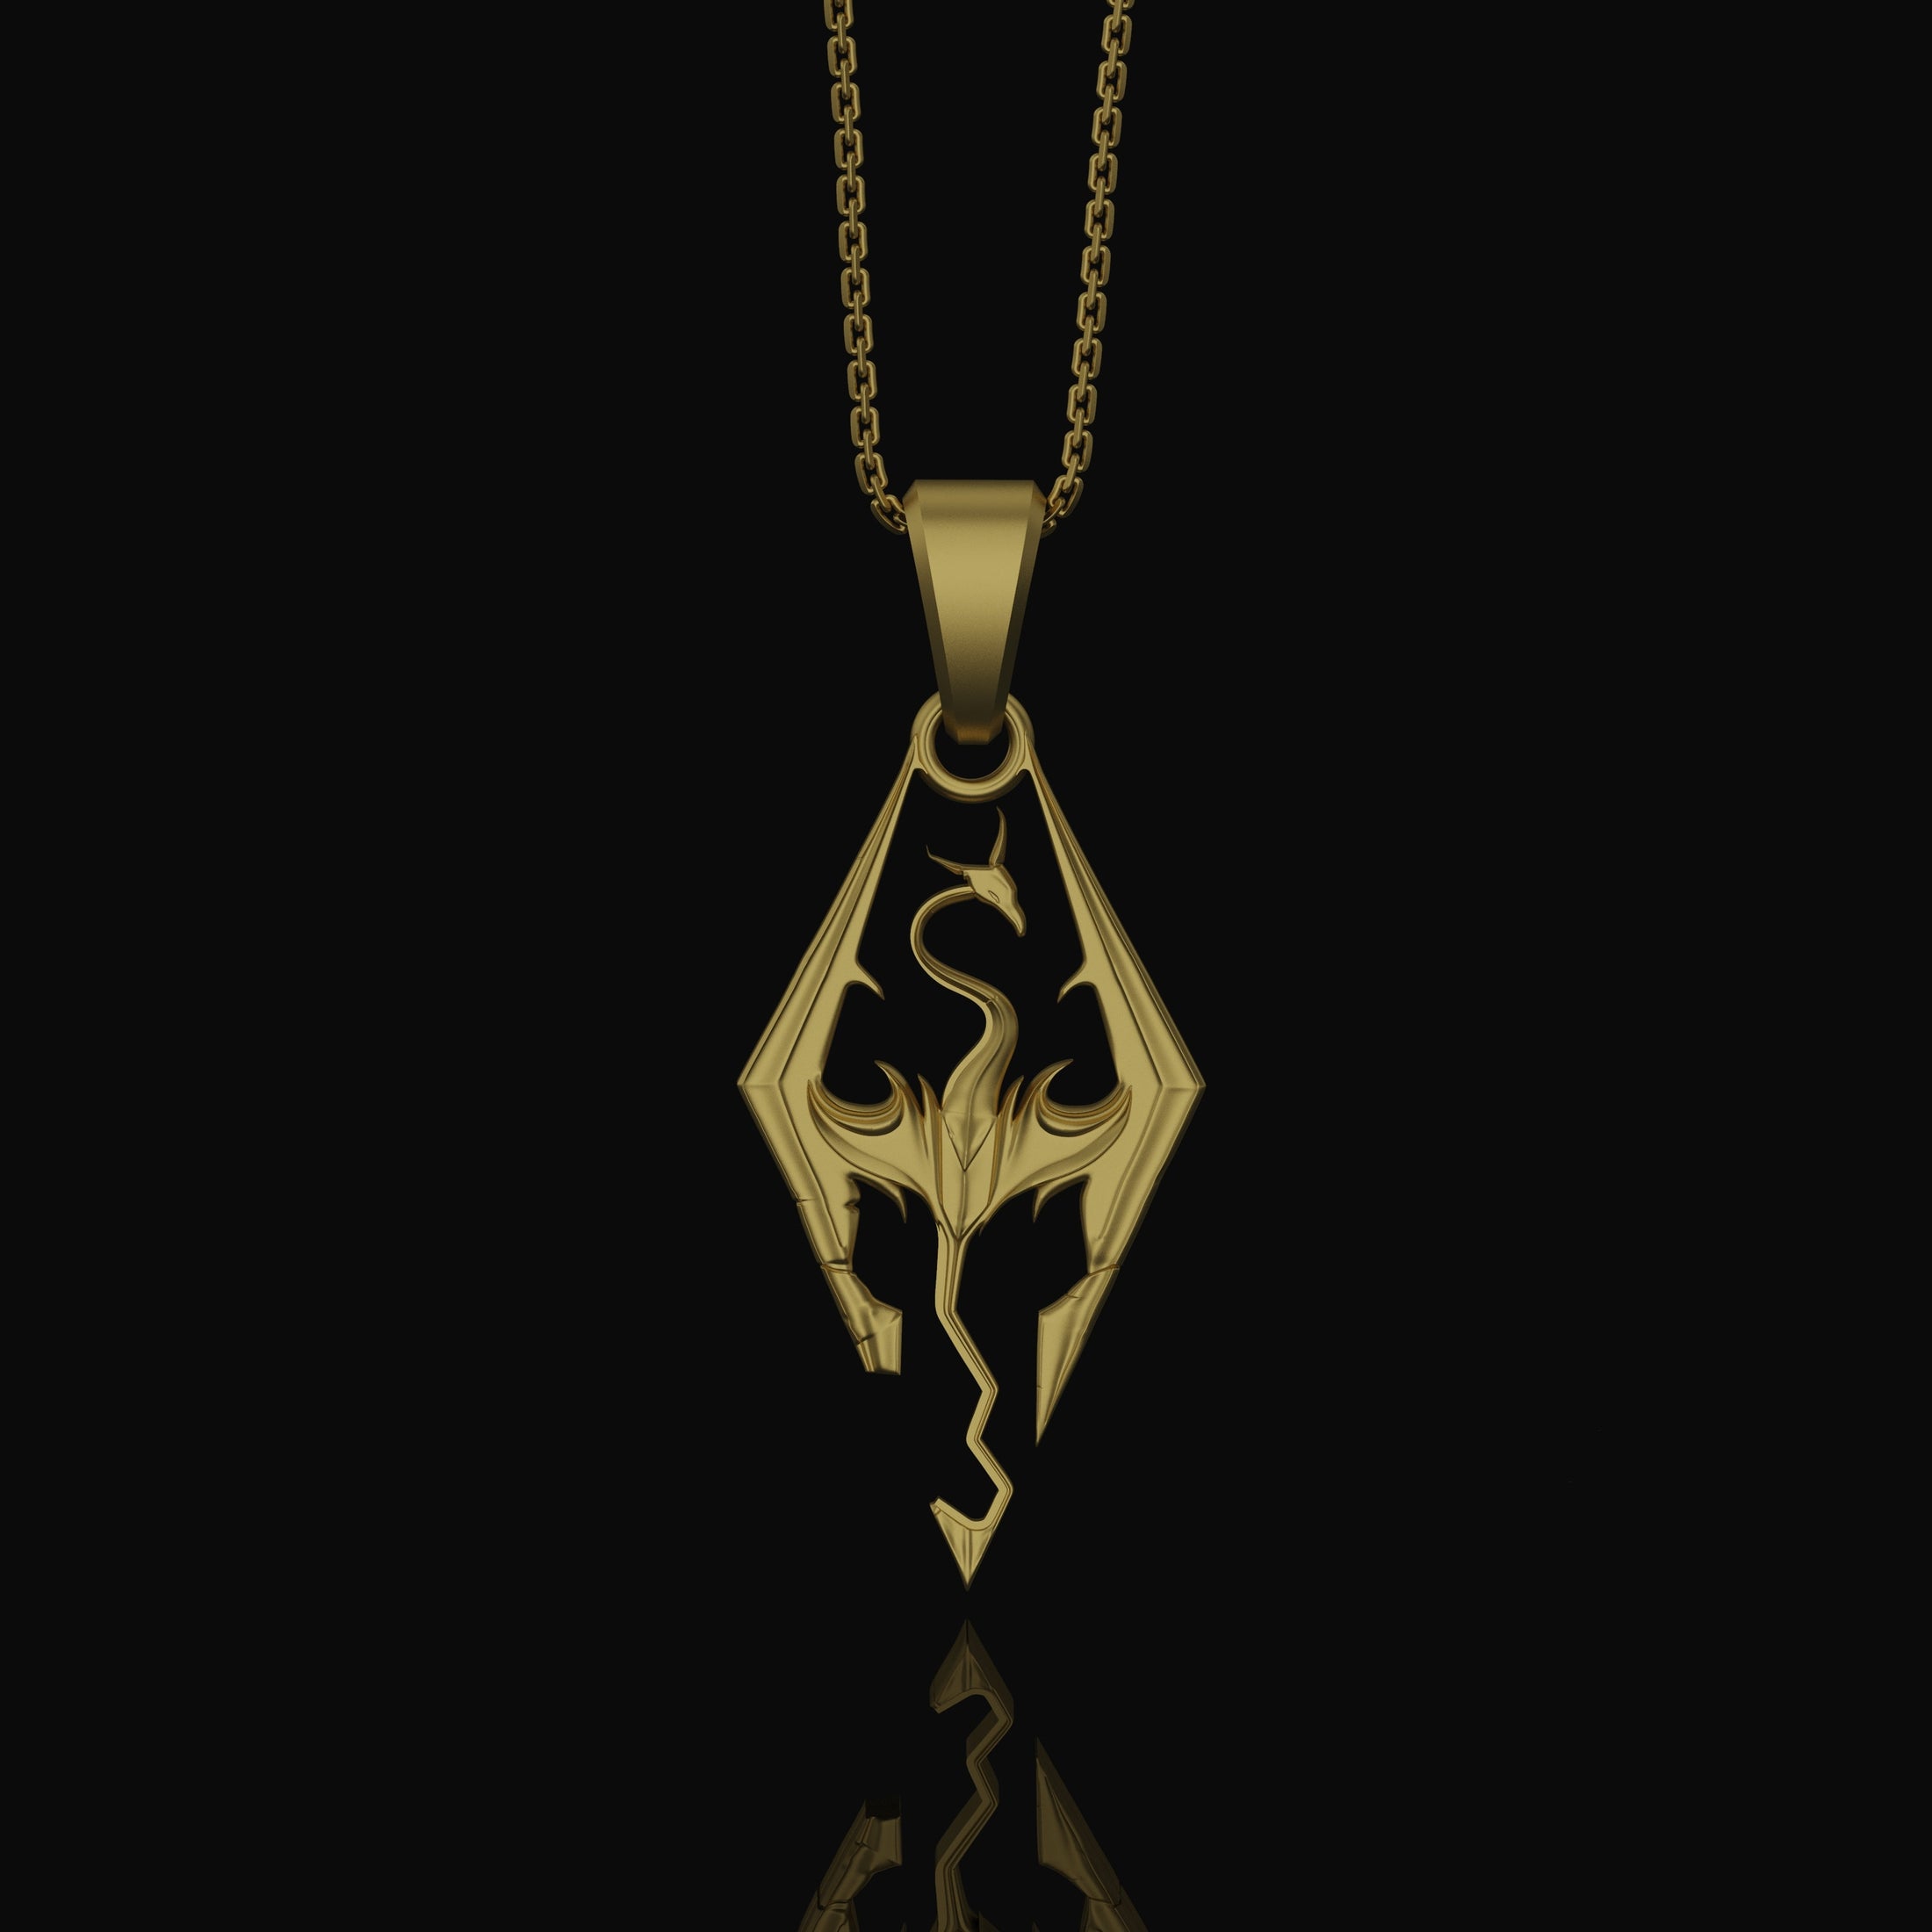 Silver Skyrim Dragon Pendant, The Elder Scrolls, Videogame Jewelry, Replica Geek Gift, Oblivion, Medieval Necklace